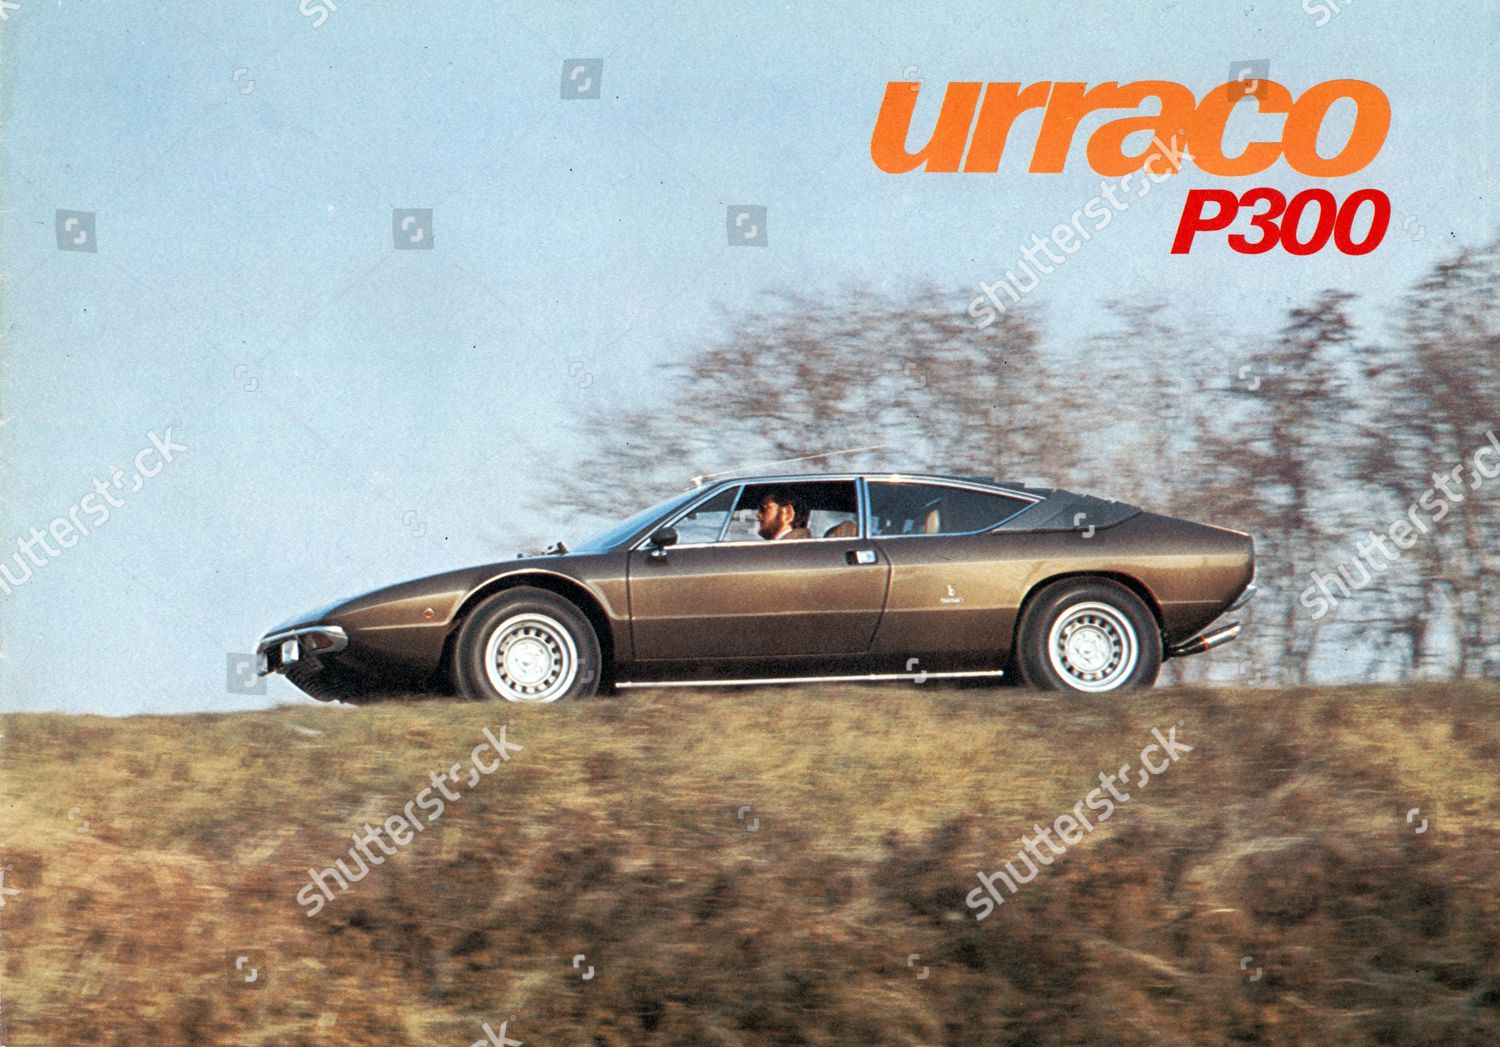 1974 Lamborghini Urraco P300 Editorial Stock Photo - Stock Image |  Shutterstock